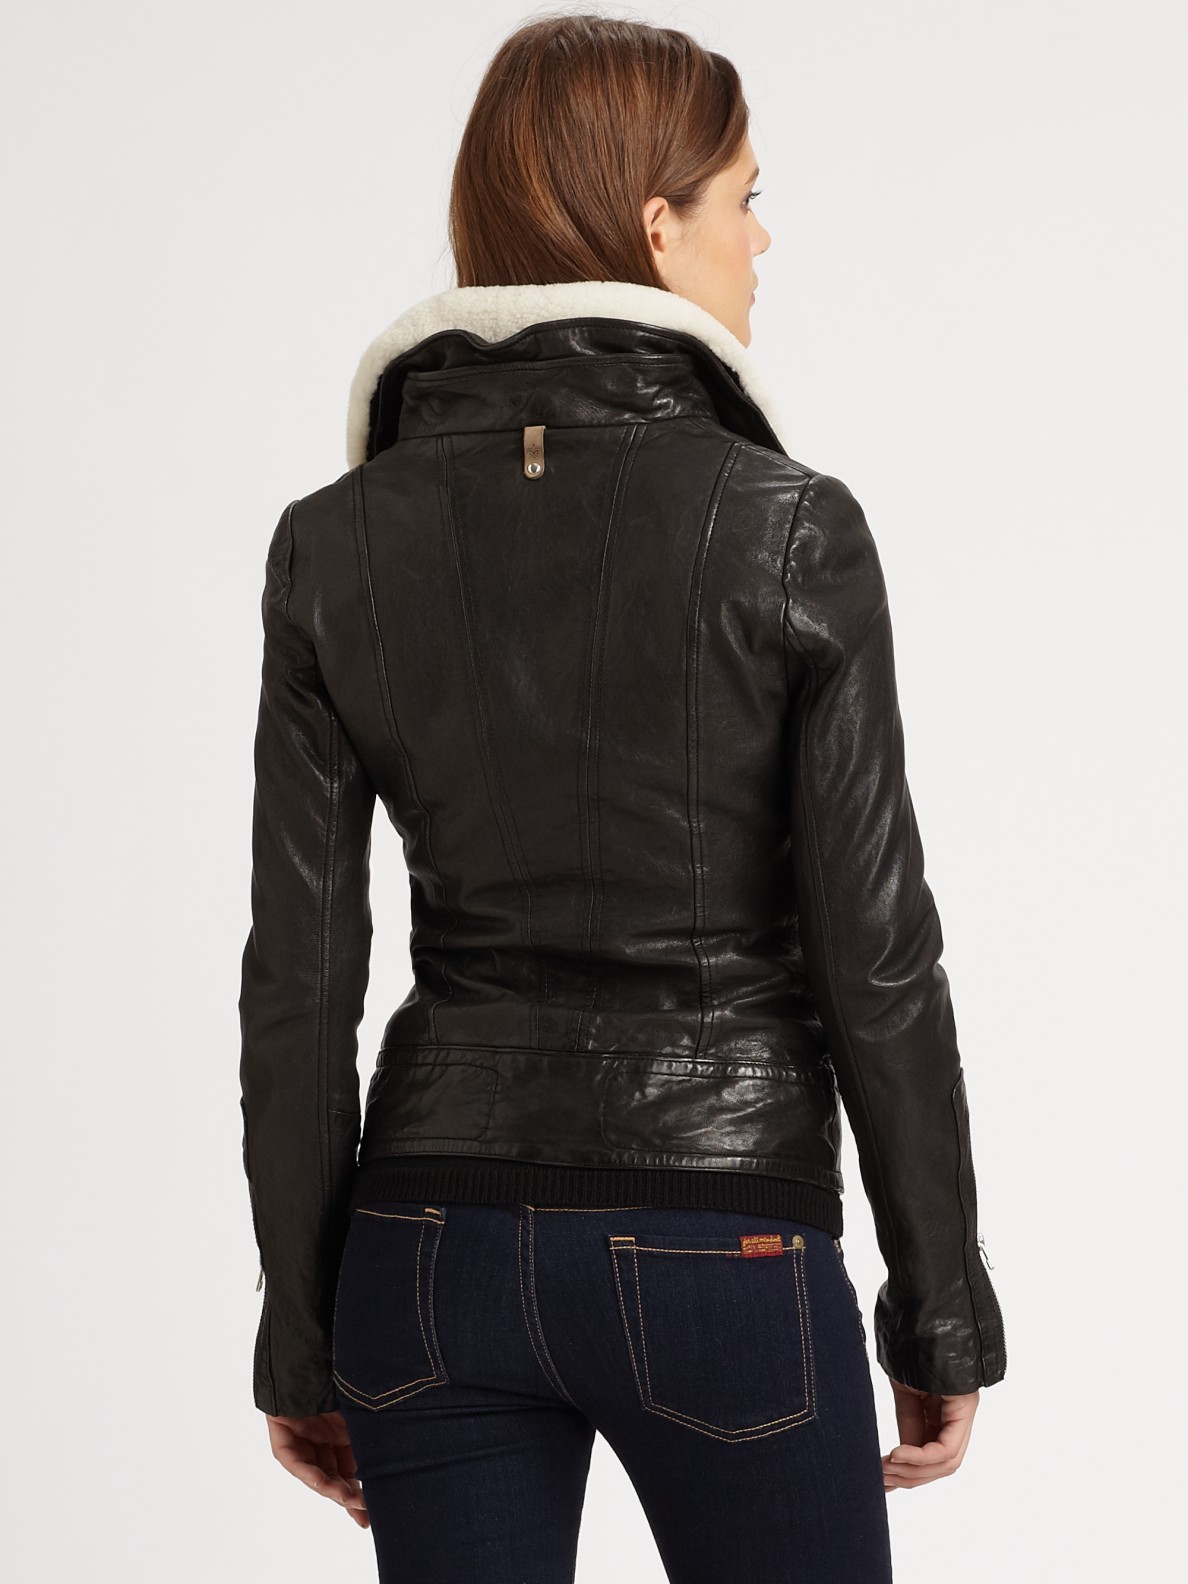 Lyst - Mackage Veruca Leather Bomber Jacket in Black